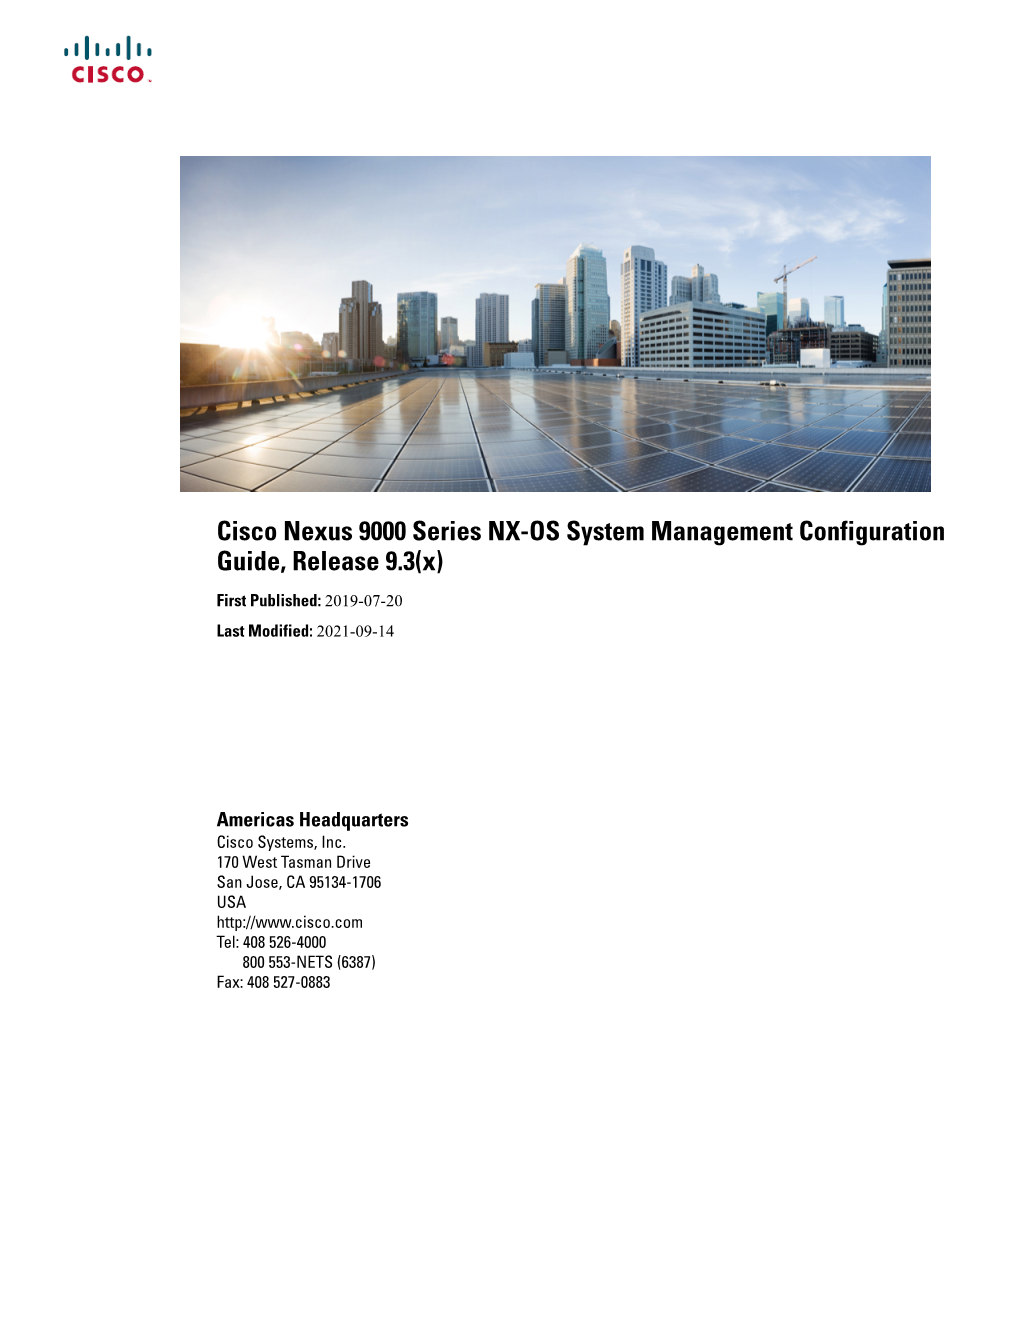 Cisco Nexus 9000 Series NX-OS System Management Configuration Guide, Release 9.3(X)